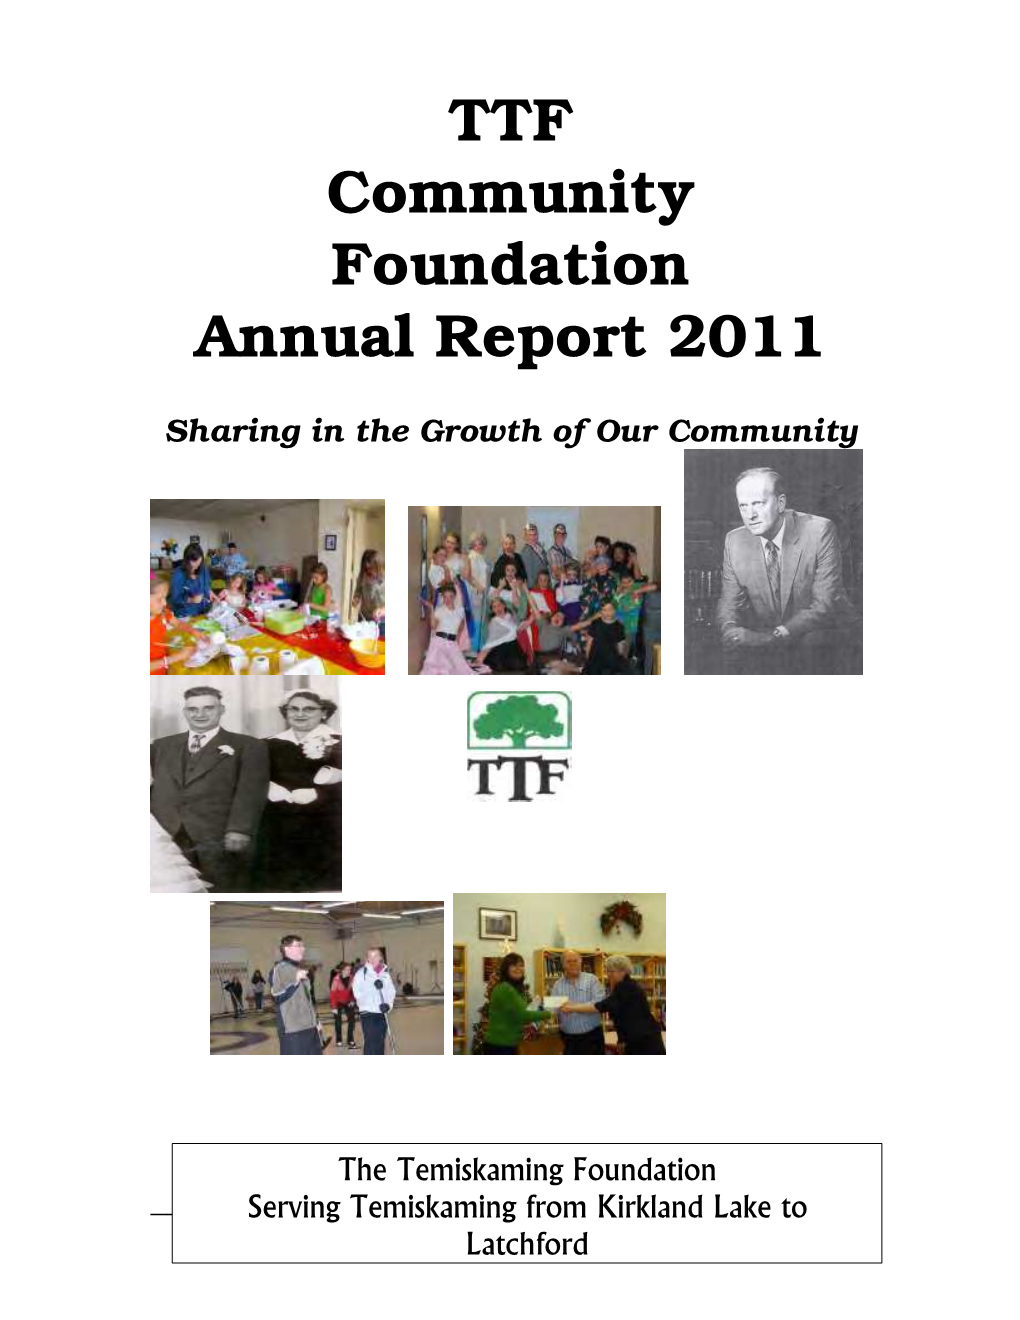 TTF Community Foundation Annual Report 2011